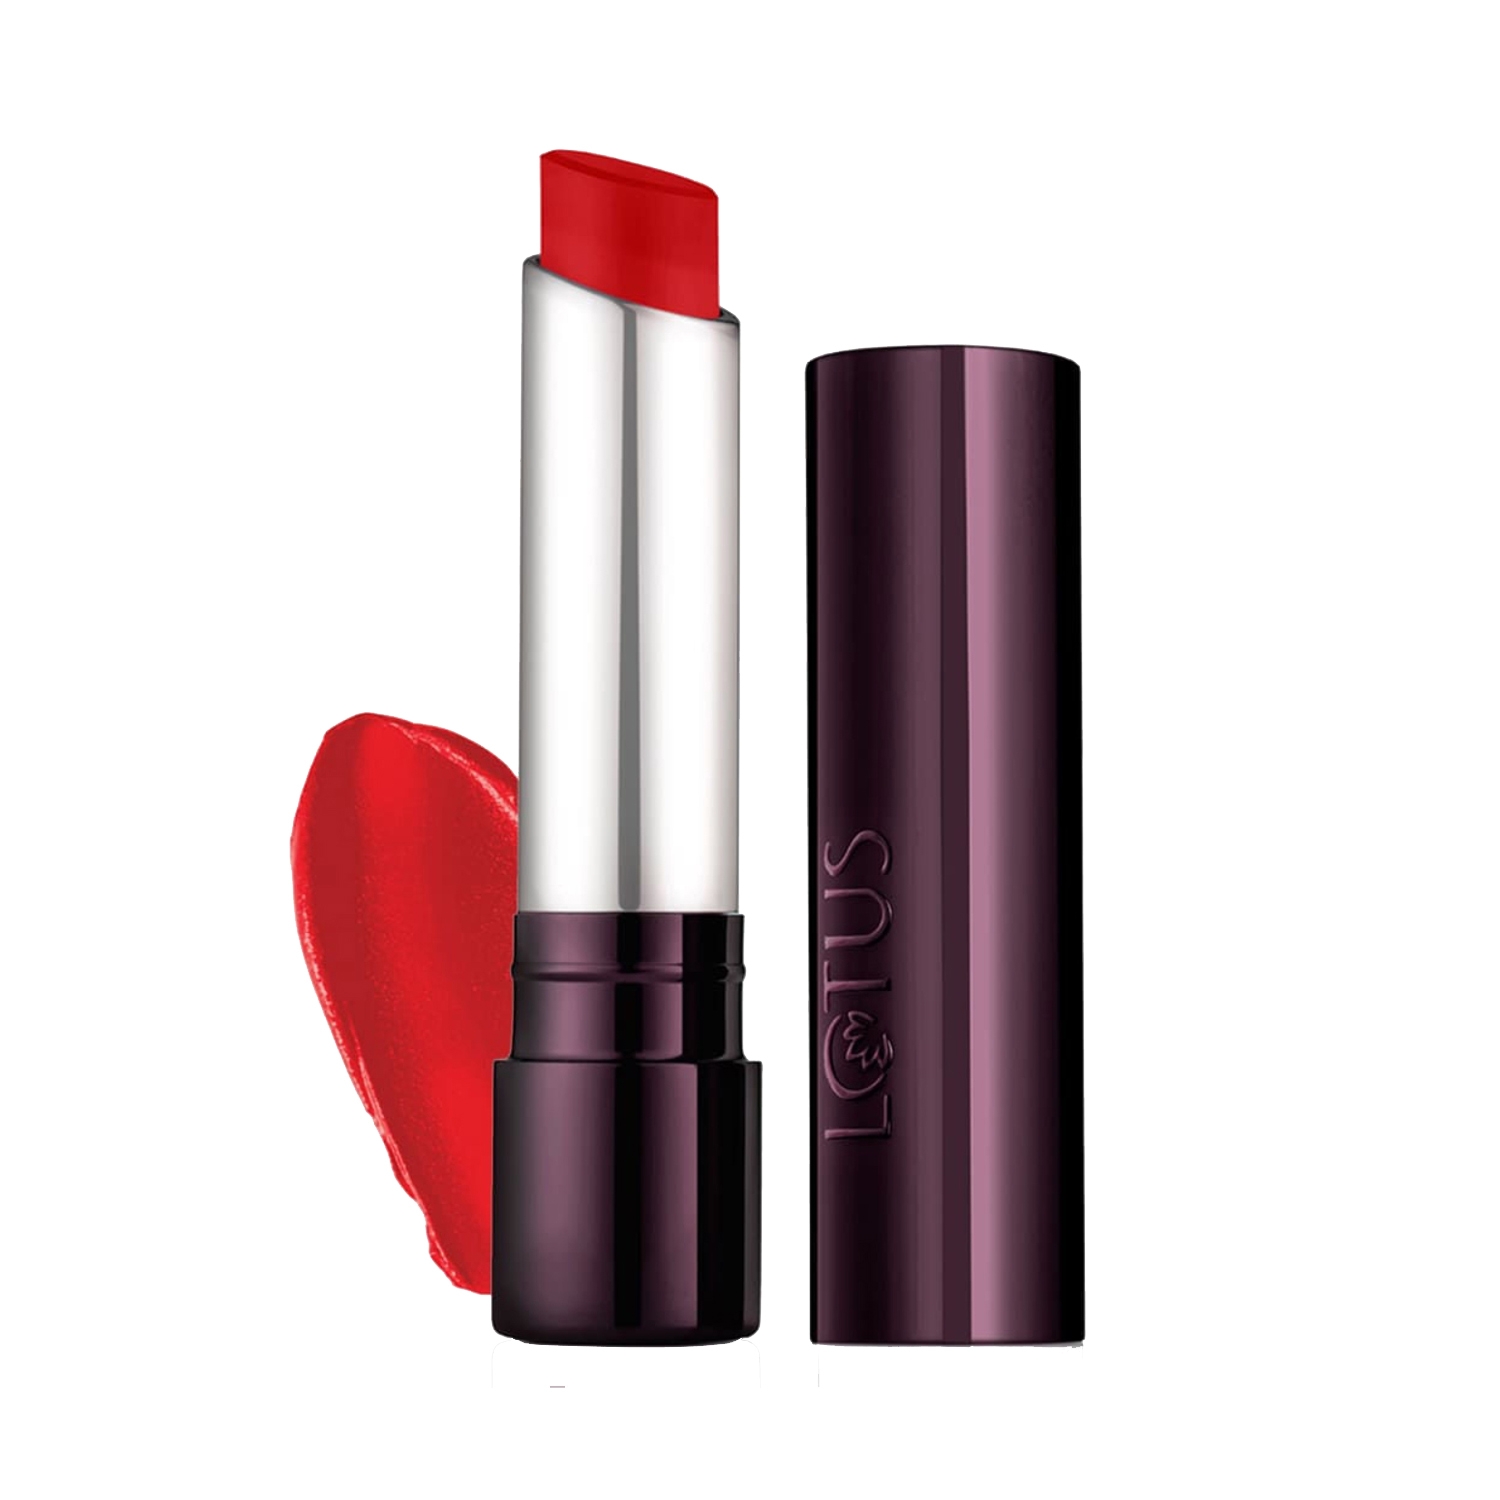 Lotus | Lotus Makeup Proedit Silk Touch Gel Lip Color - SG04 Red Addict (4.2g)